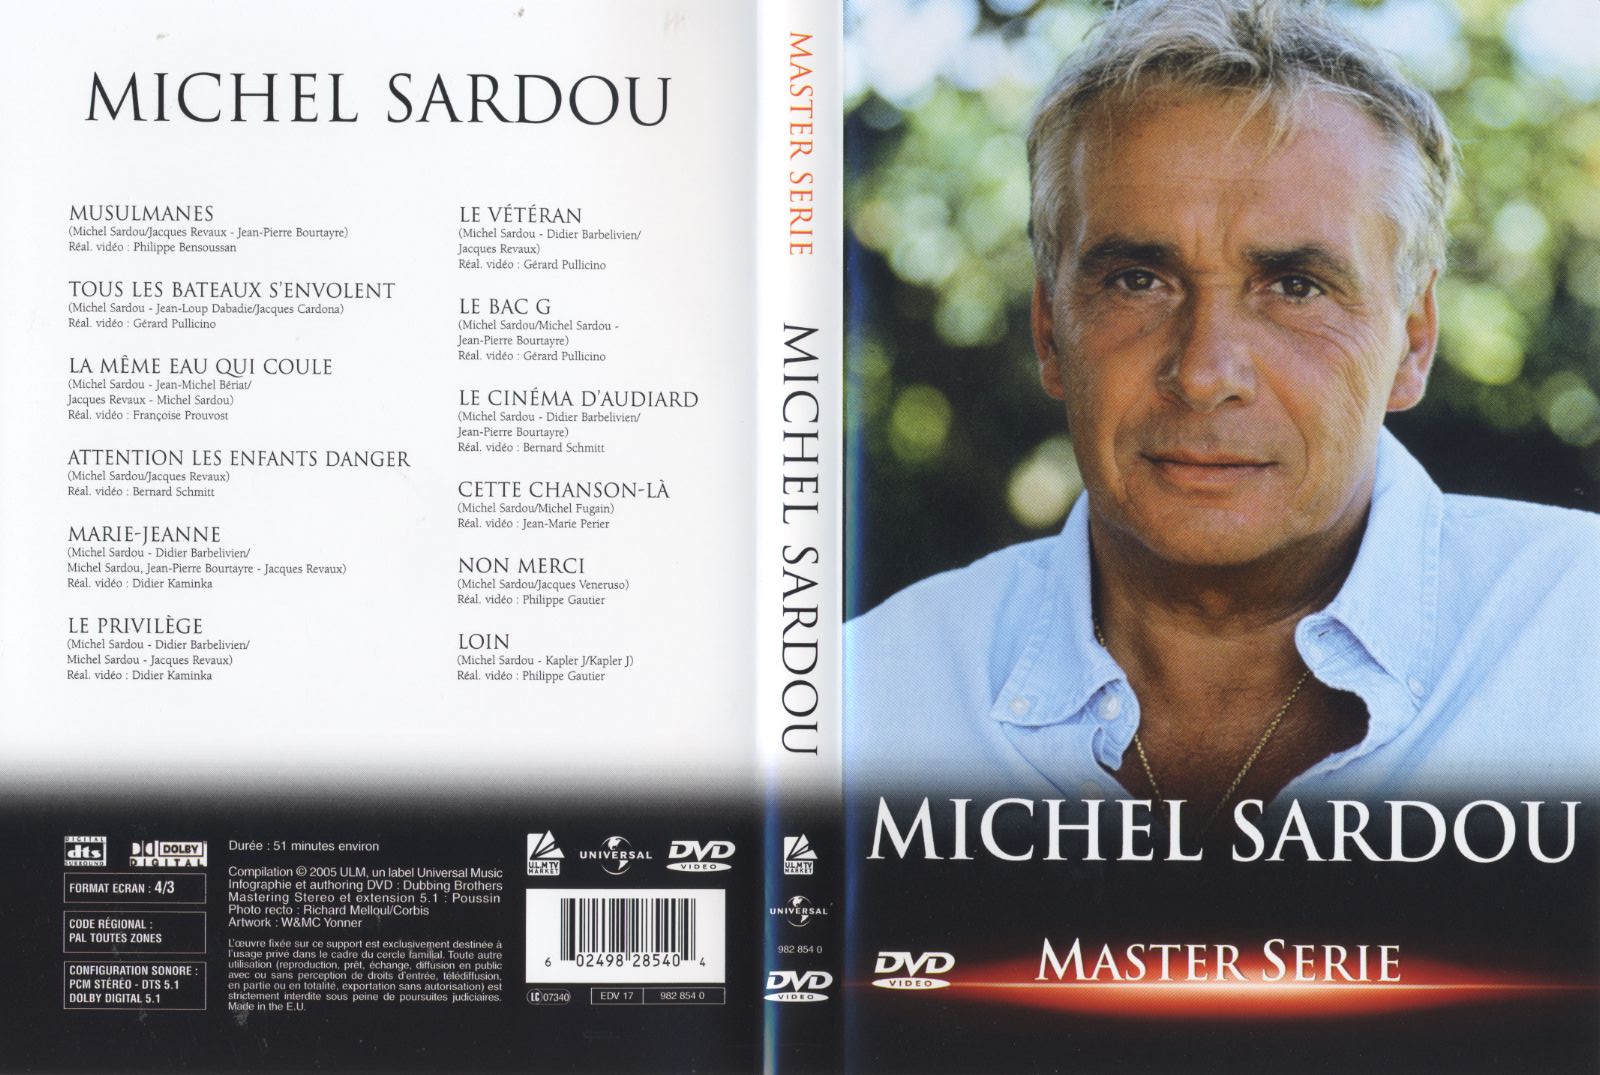 Jaquette DVD Michel Sardou Master serie